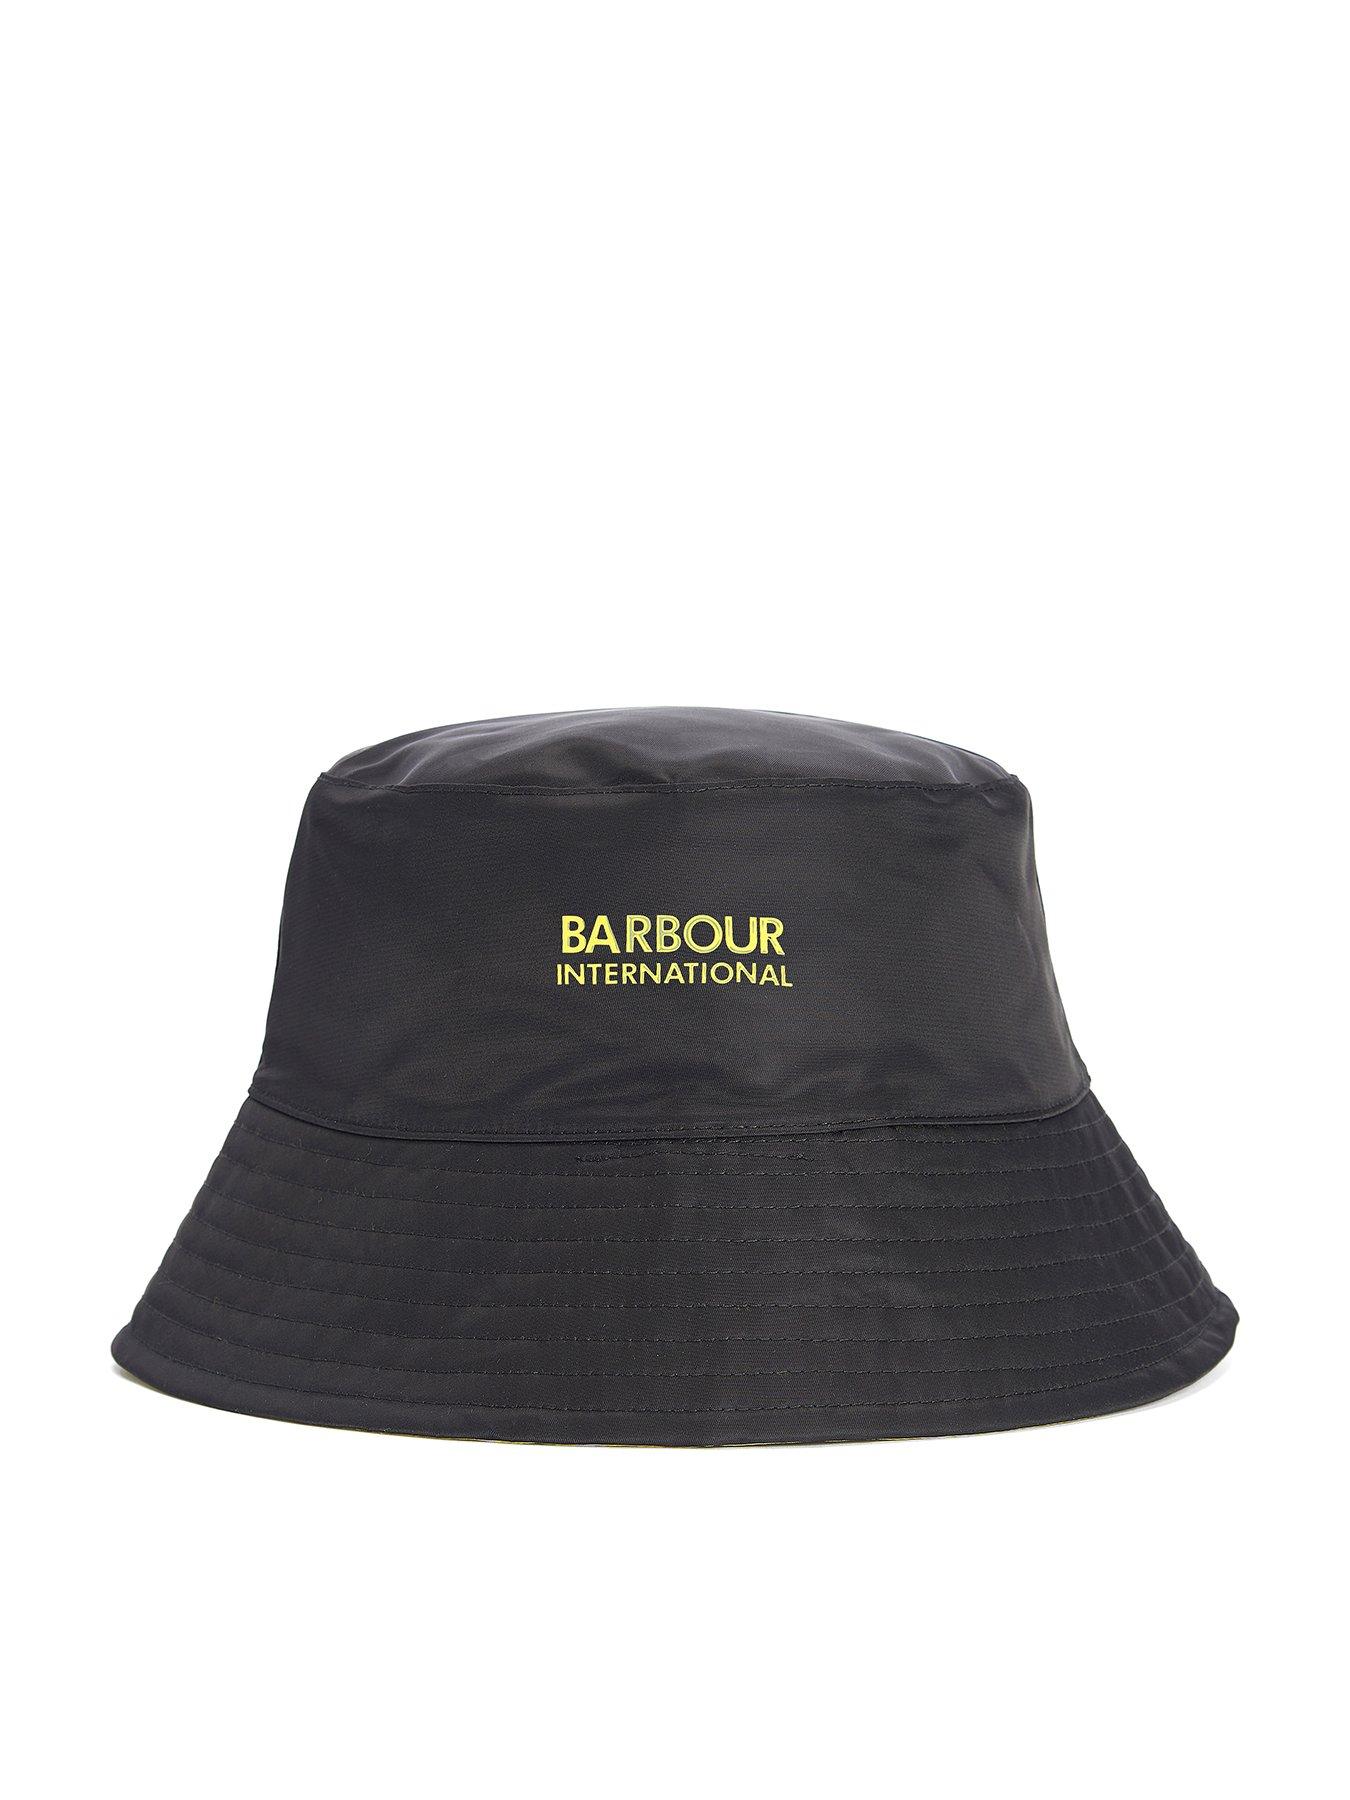 Barbour Mens Wax Sports Bucket Hat Black Waterproof Size S, M, L